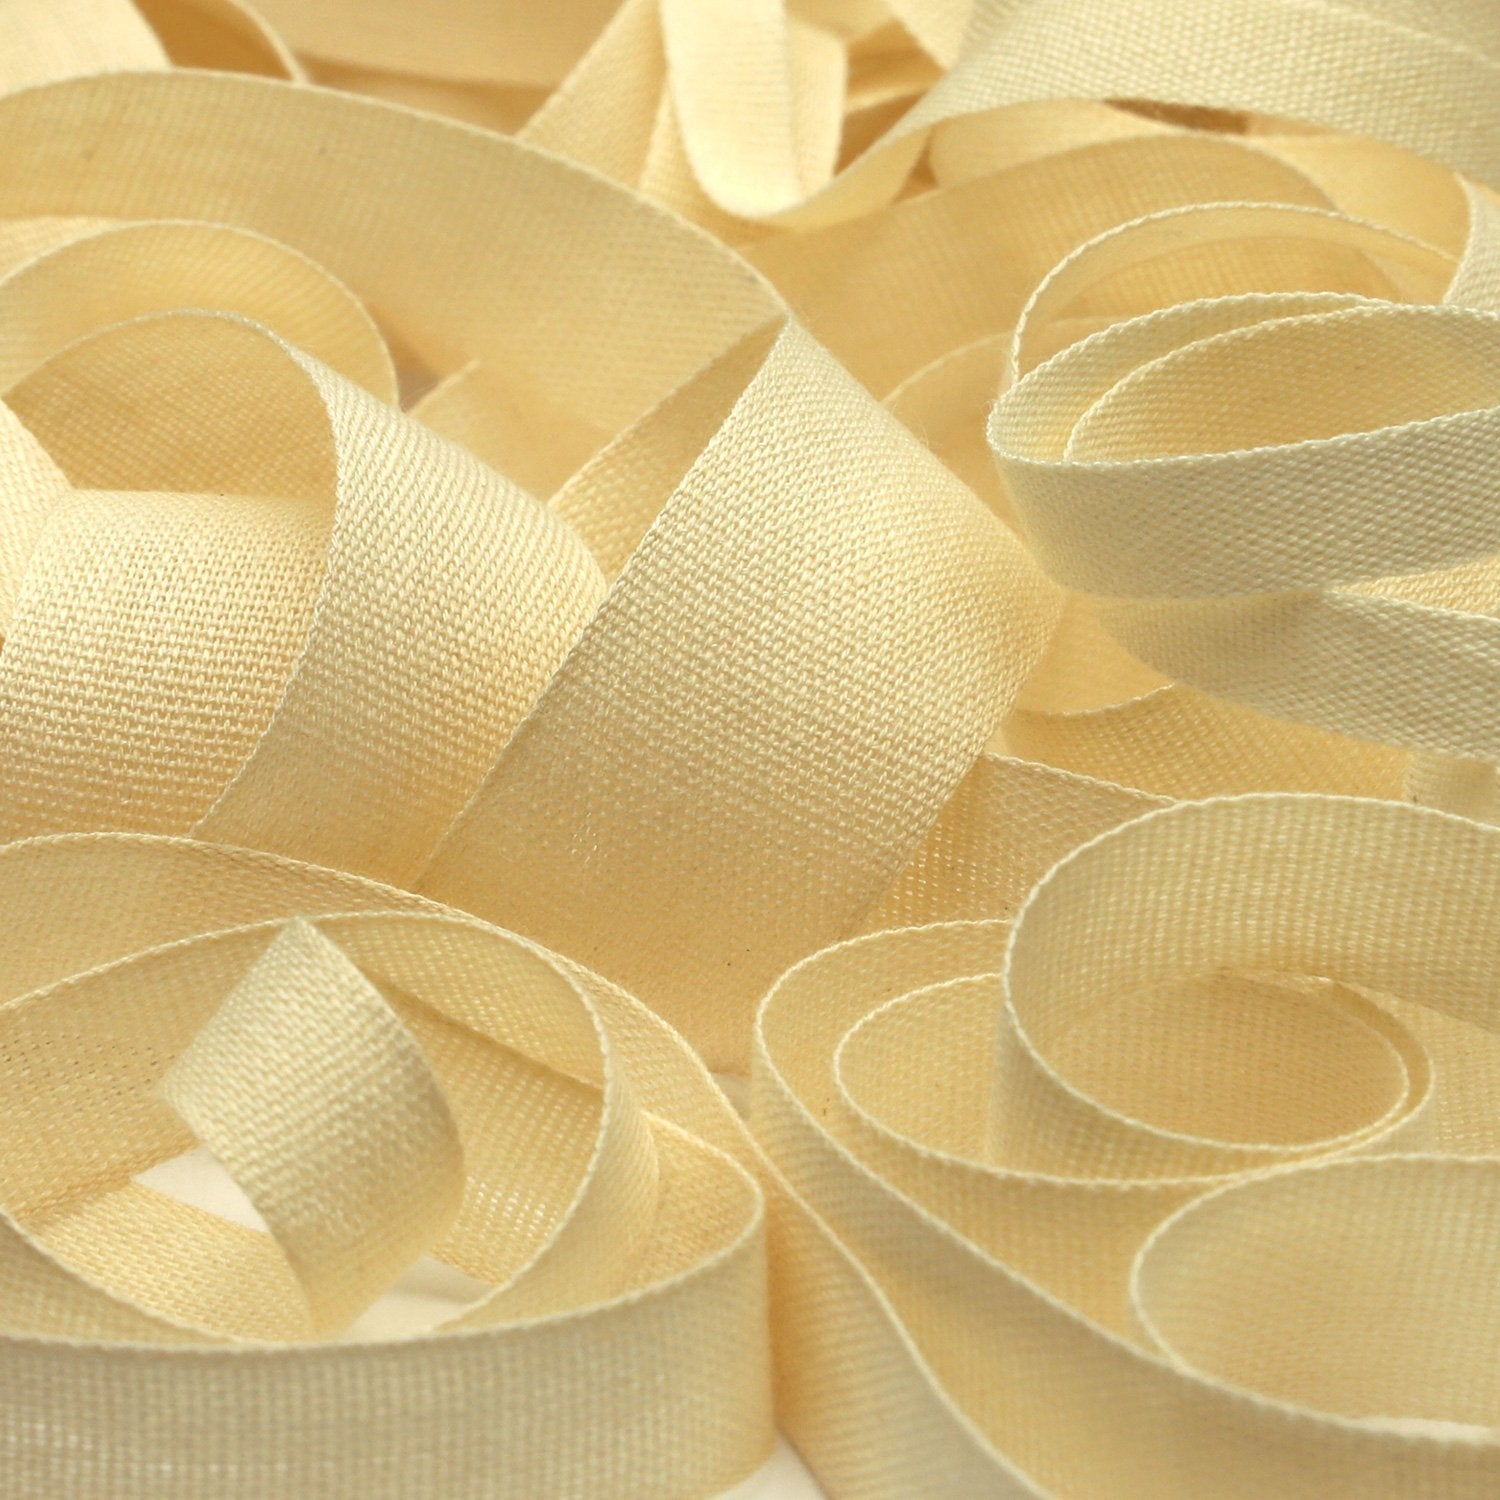 FUJIYAMA RIBBON Organic Cotton Taffeta Ribbon 12mm Ecru 9.14 Meters Roll